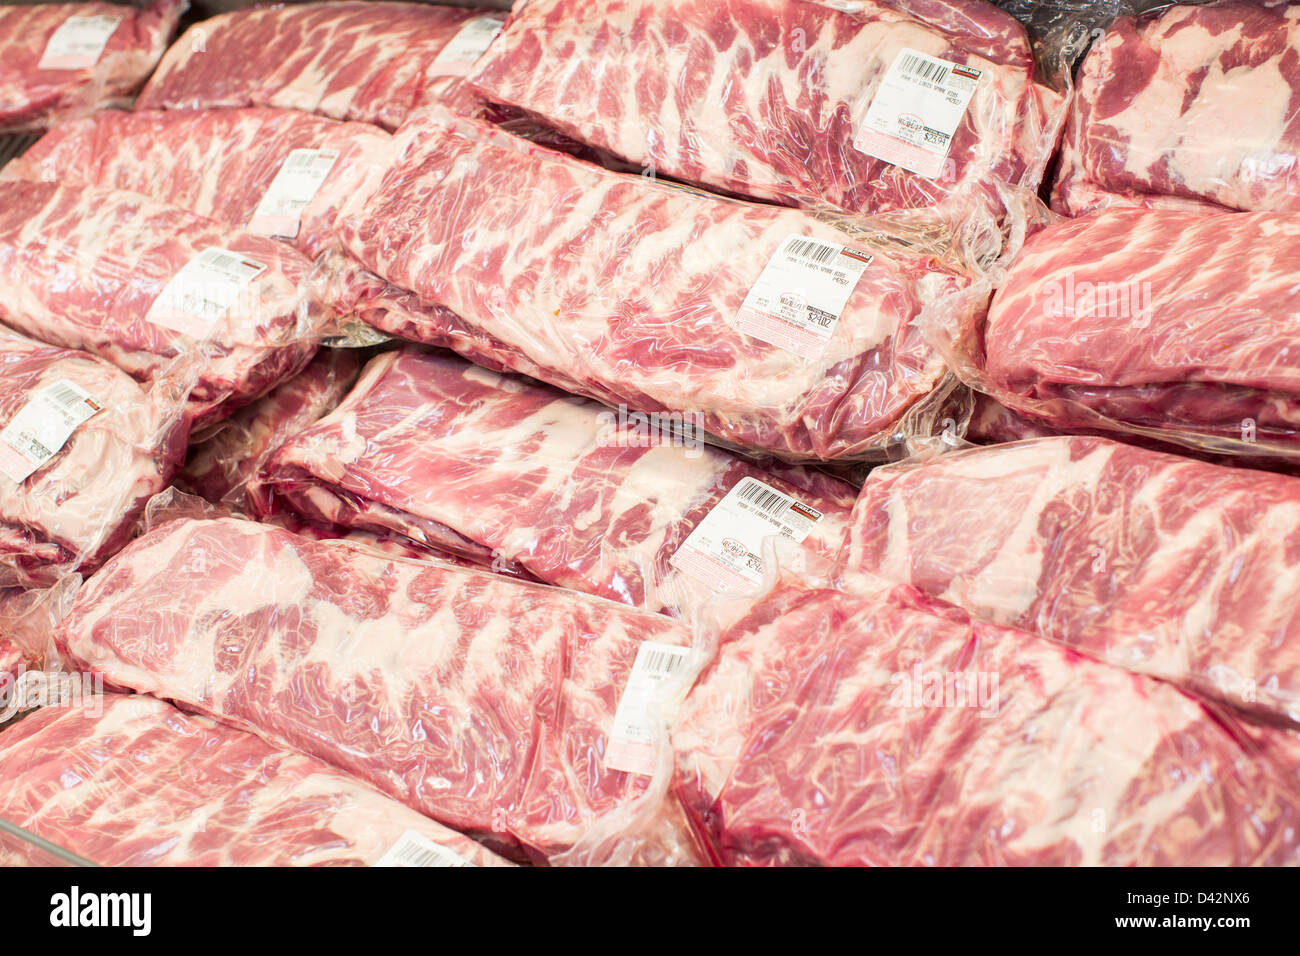 Pork ribs on display at a Costco Wholesale Warehouse Club. Stock Photo